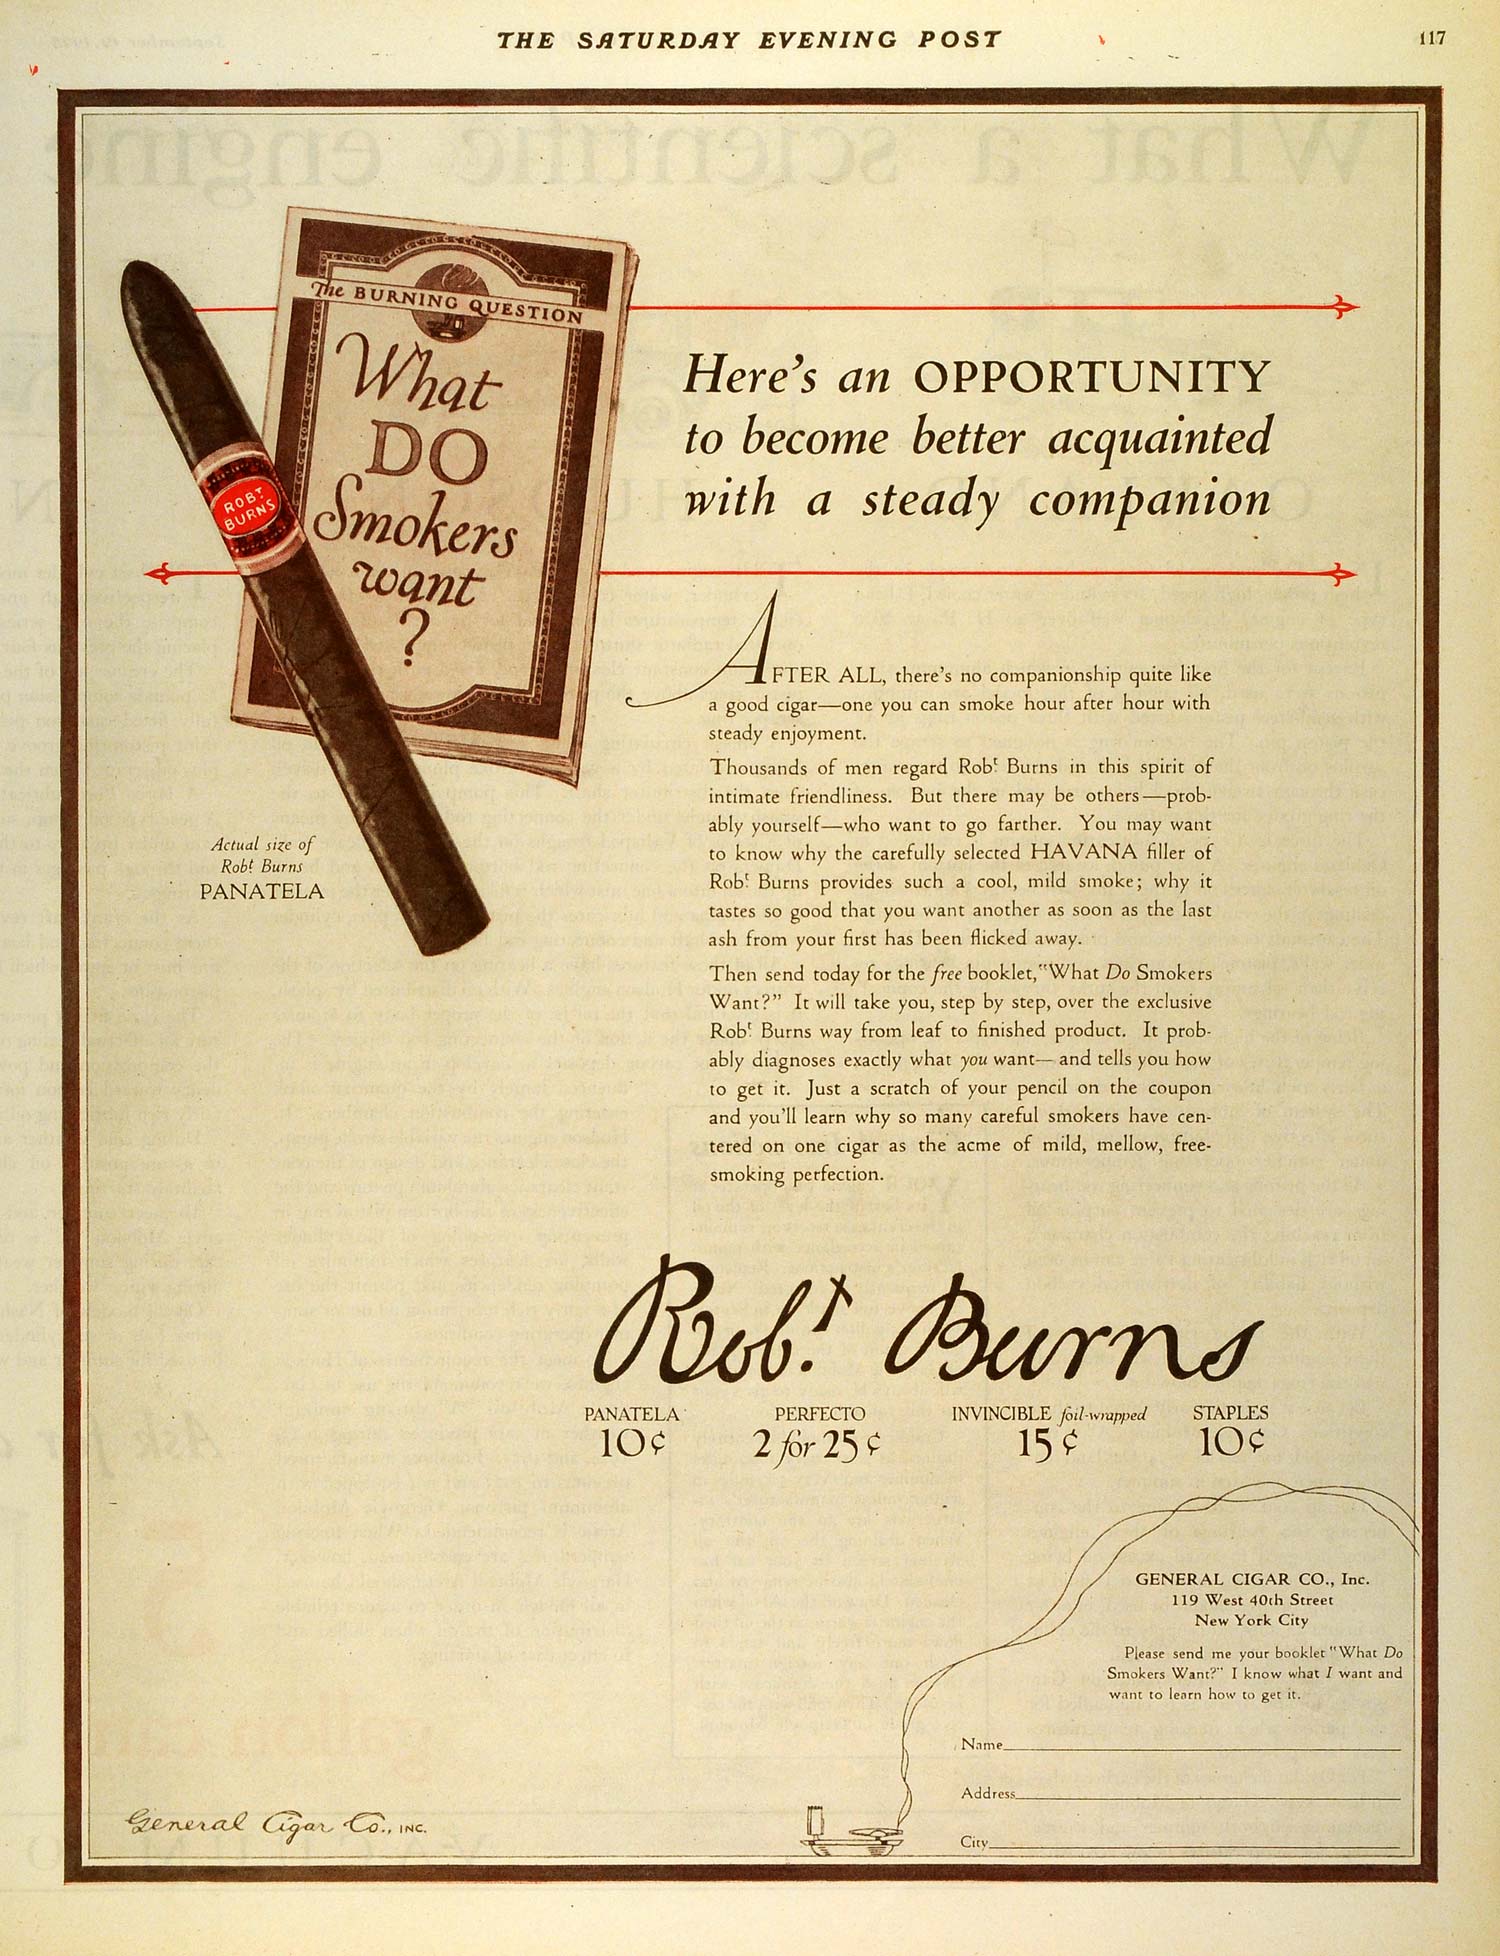 1925 Ad General Cigar Panatela Perfecto Invincible Staples Robt Burns SEP5